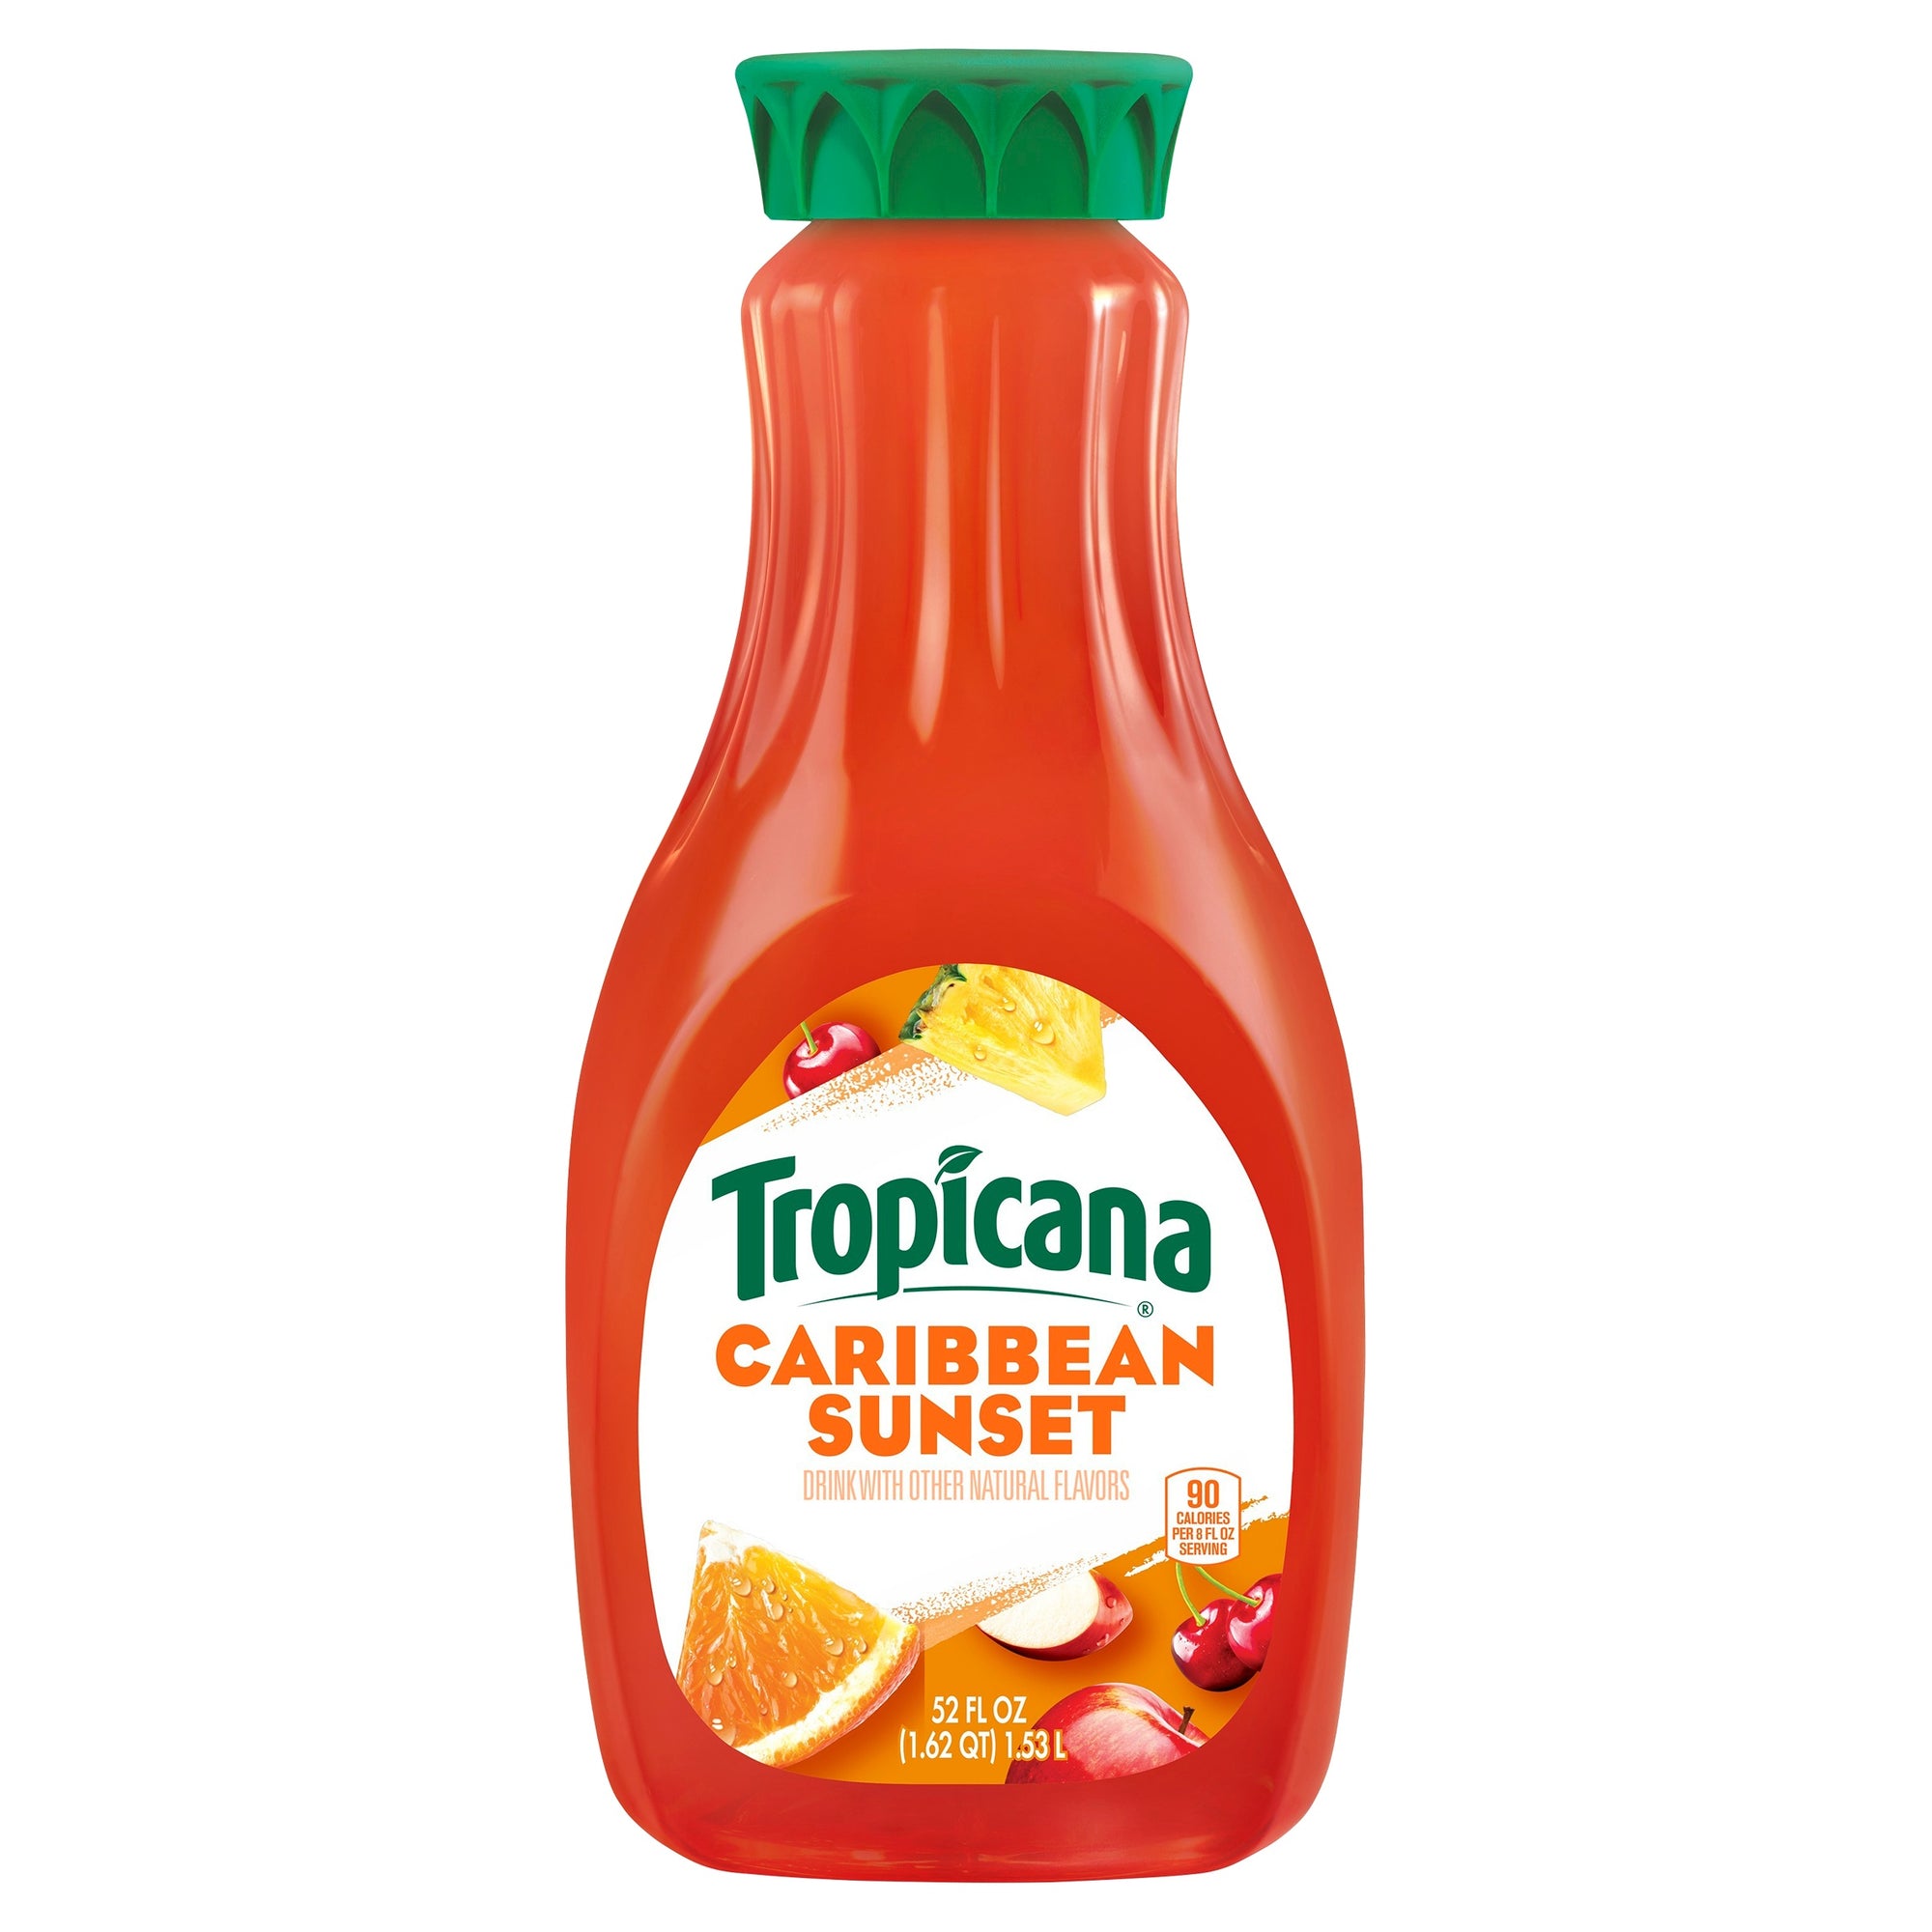 Tropicana Caribbean Sunset Juice 52oz